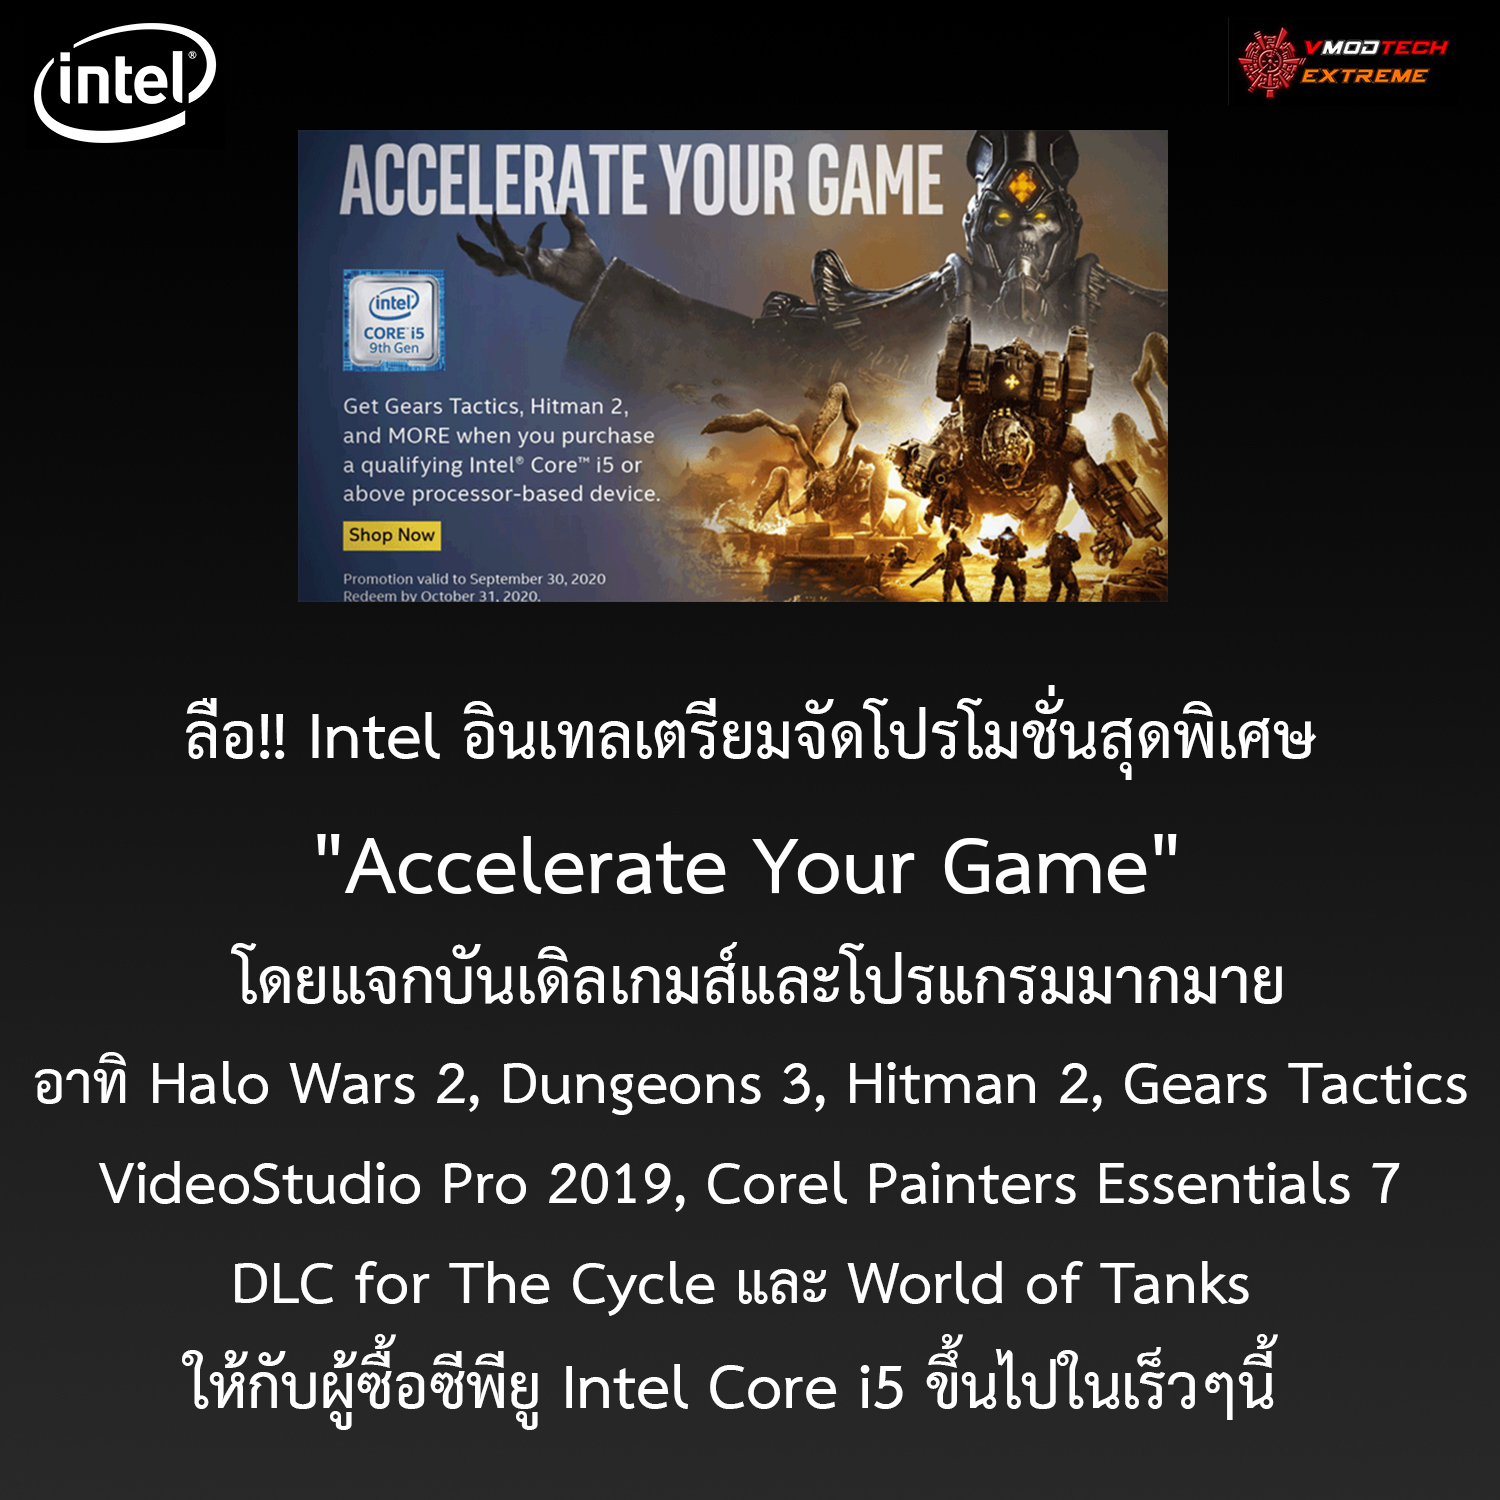 intel accelerate your game bundle promotion ลือ!! อินเทลเตรียมจัดโปรโมชั่นสุดพิเศษ Accelerate Your Game โดยแจกบันเดิลเกมส์และโปรแกรมมากมายกับผู้ซื้อซีพียู Intel Core i5 ขึ้นไปเร็วๆนี้ 